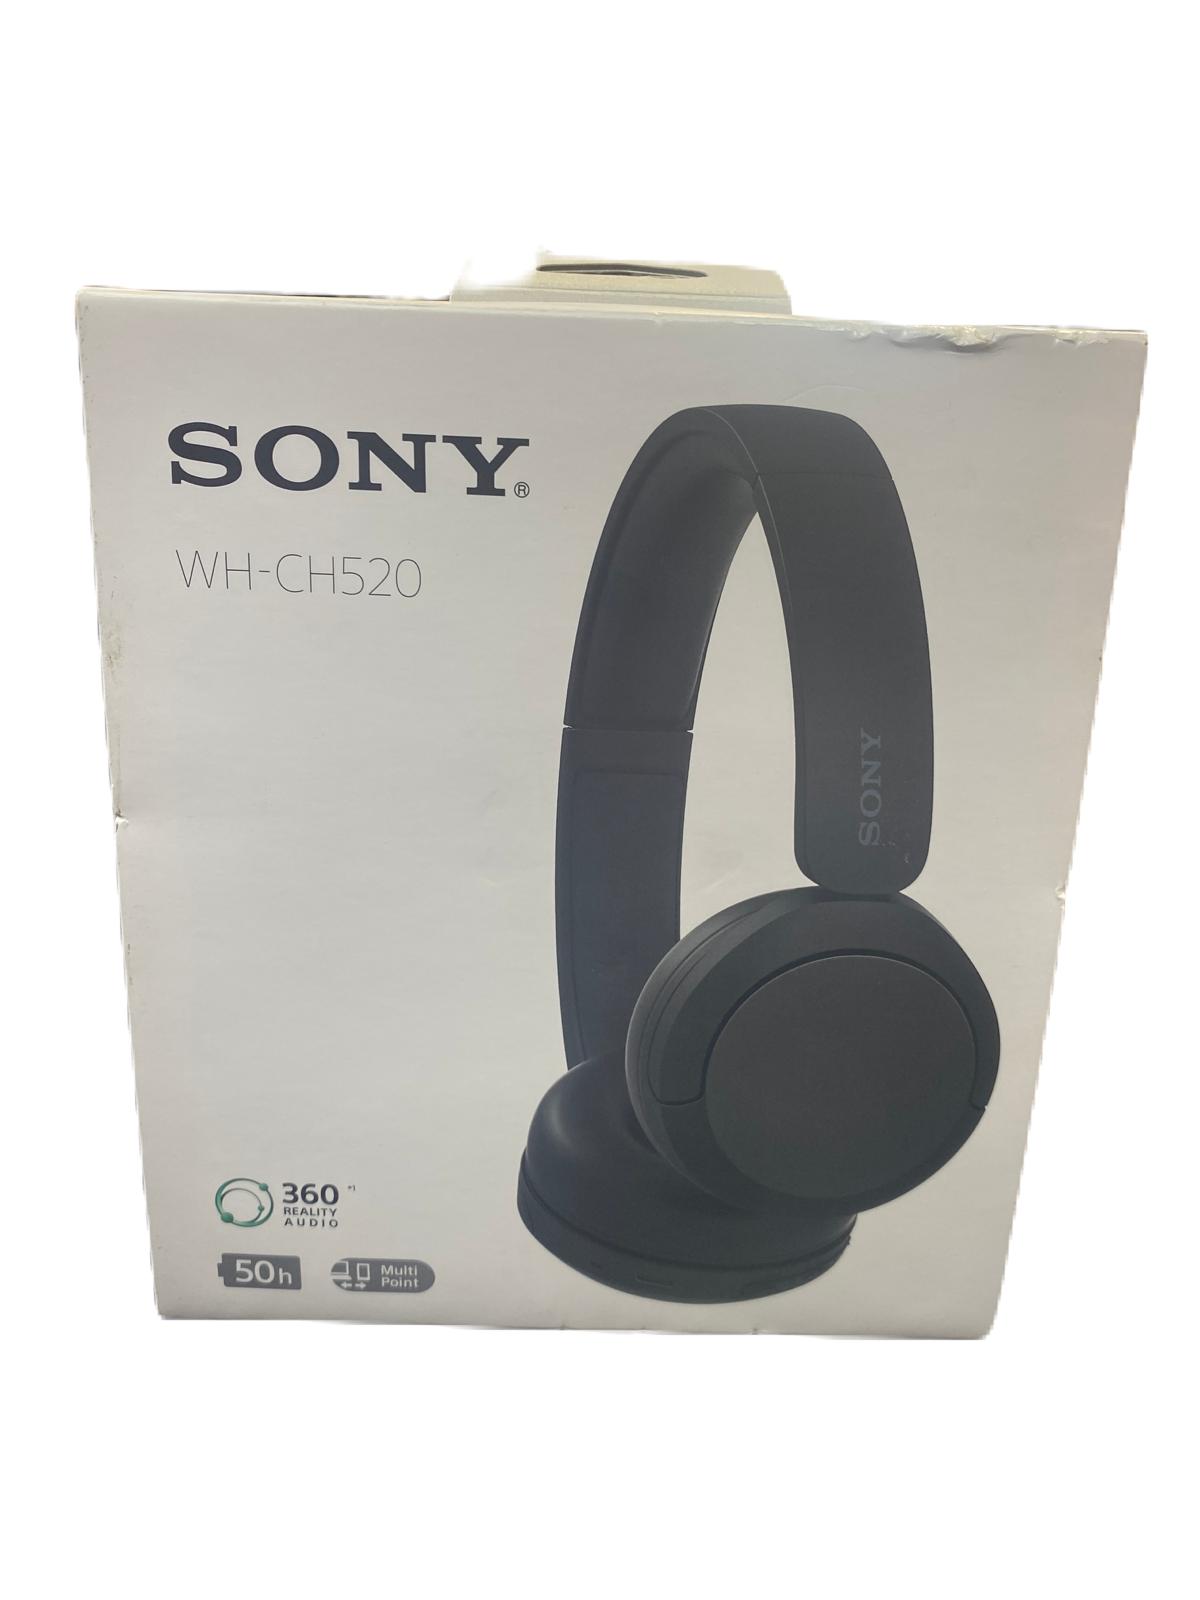 Sony WH-CH520 Wireless headset